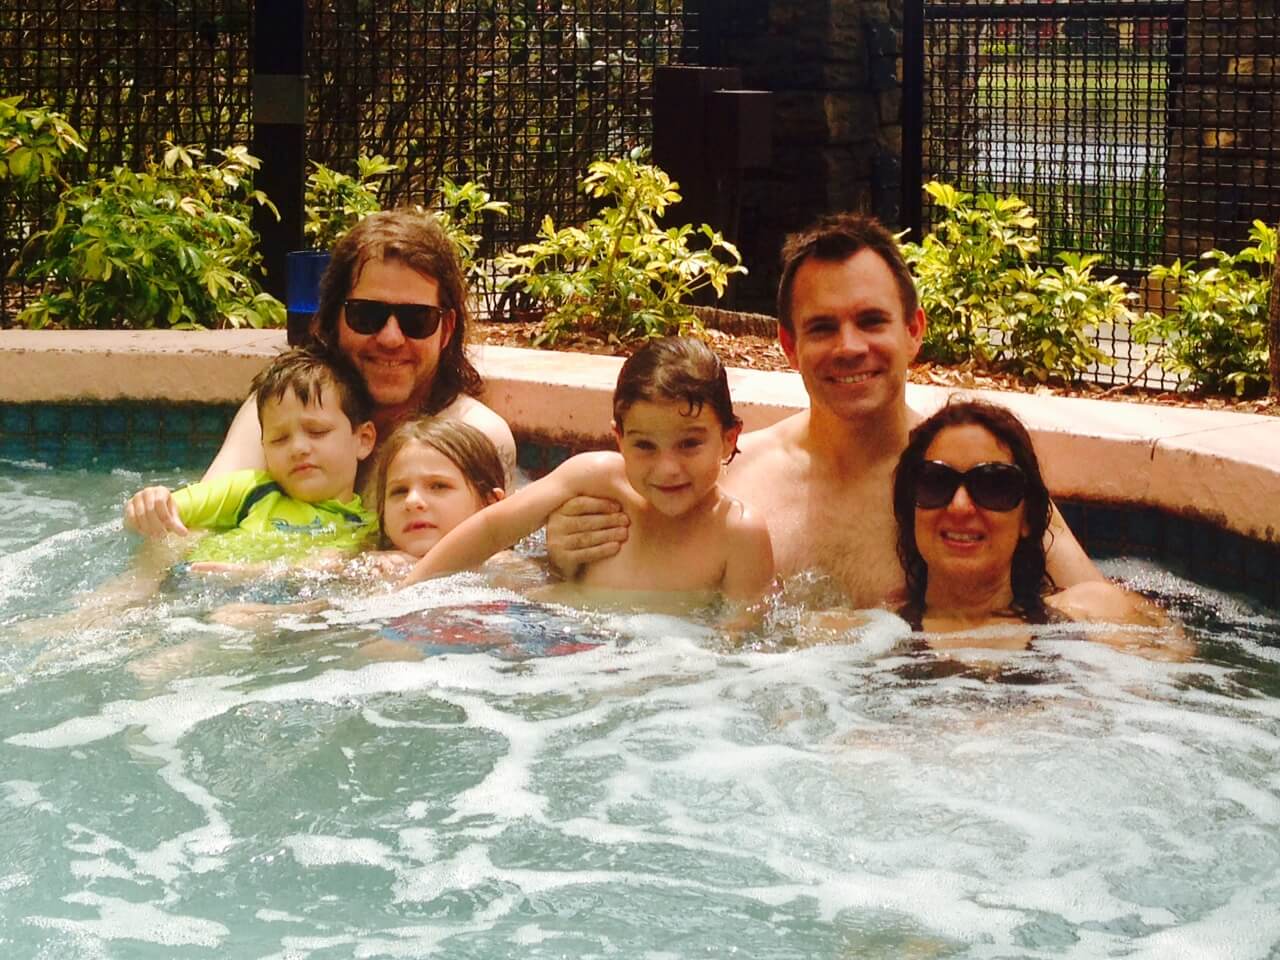 Enjoying the hot tub at the Wyndham Bonnet Creek in Orlando. A great off-site hotel at Disney World.